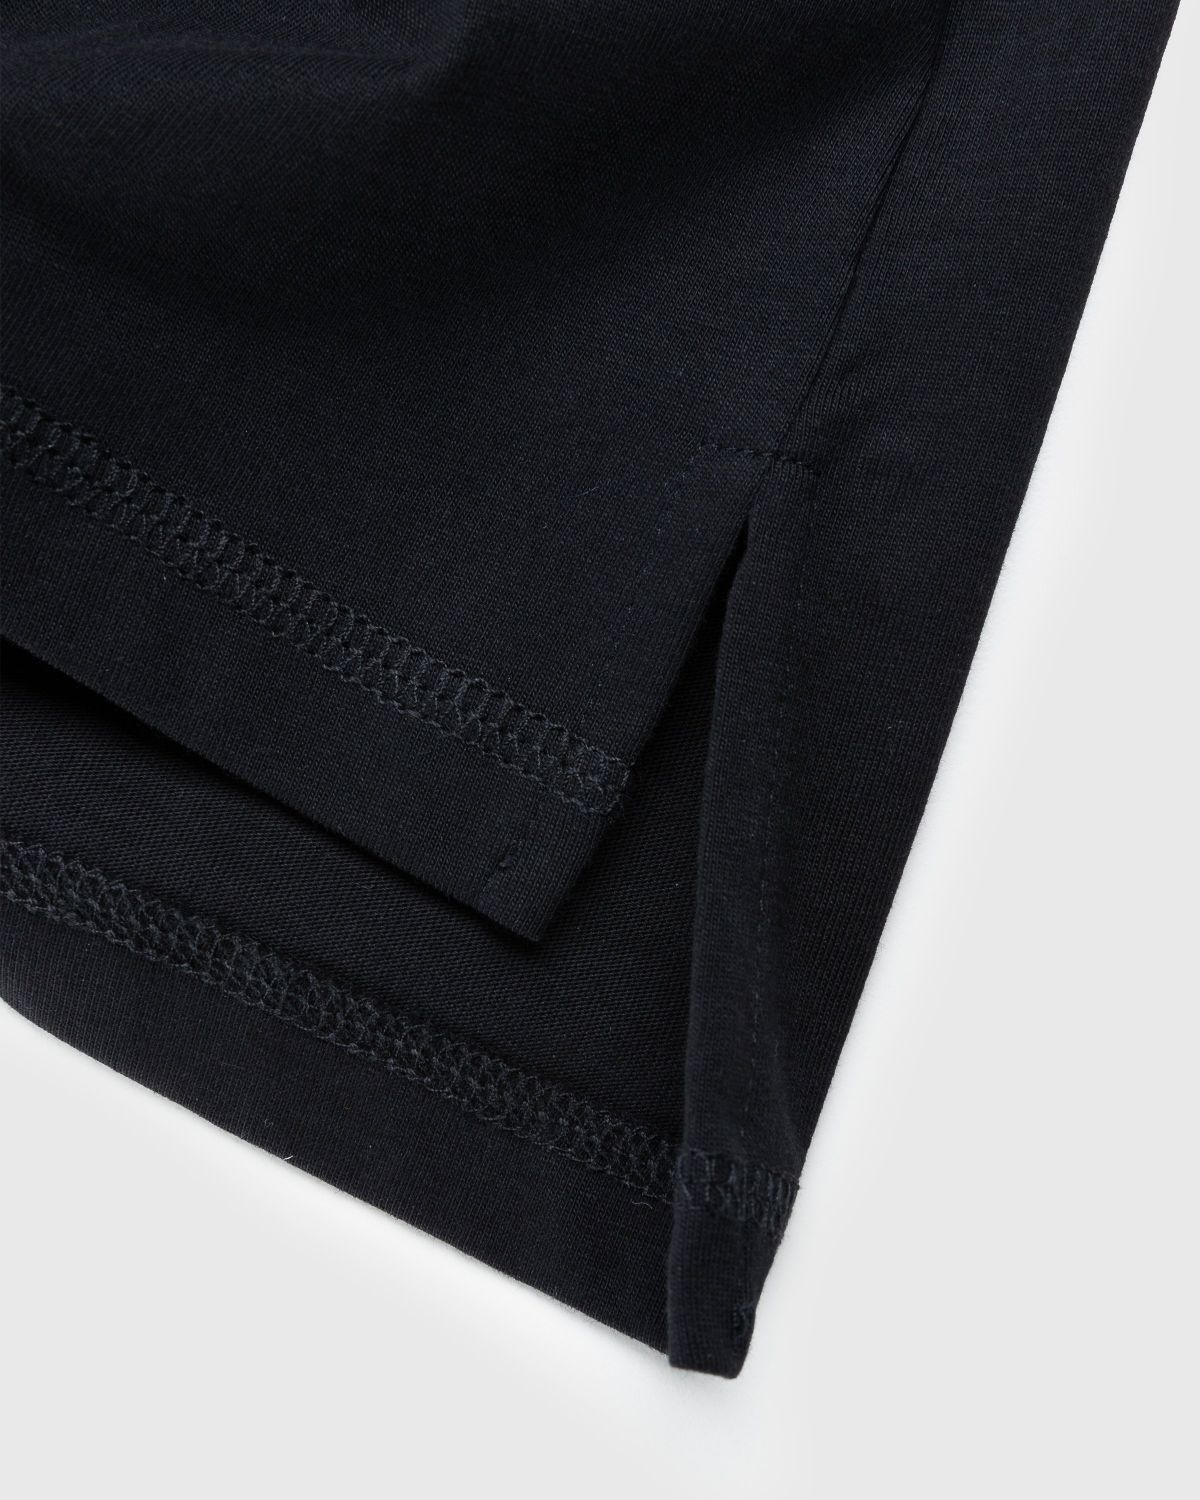 ACRONYM – S29-PR-A Organic Cotton Longsleeve T-Shirt Black - Longsleeves - Black - Image 4